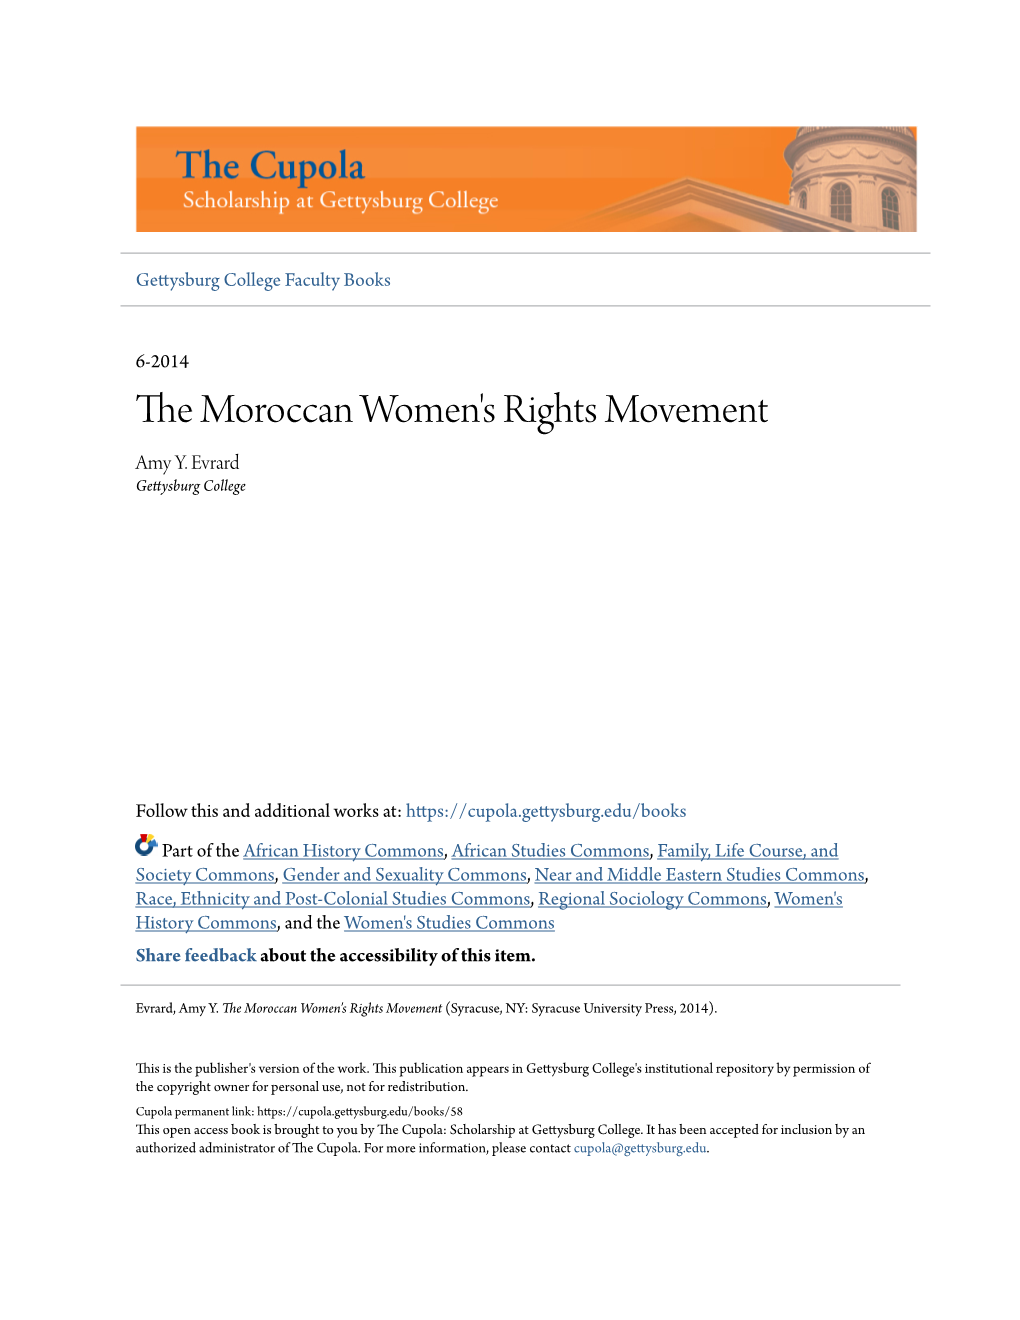 The Moroccan Women's Rights Movement (Syracuse, NY: Syracuse University Press, 2014)